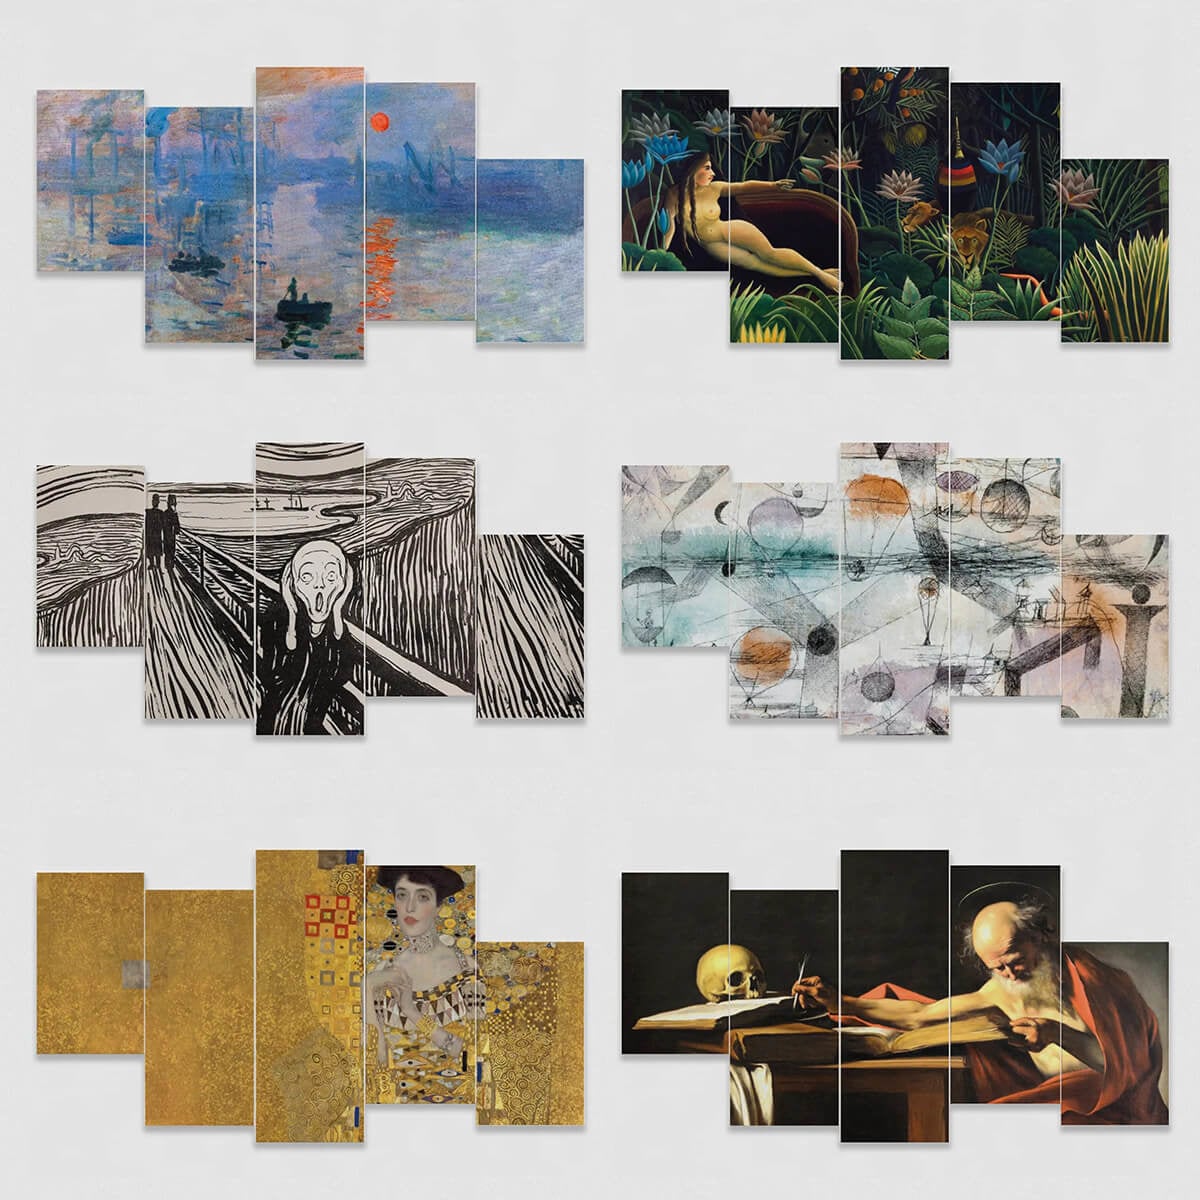 Henri Rousseau’s The Dream Framed Murals